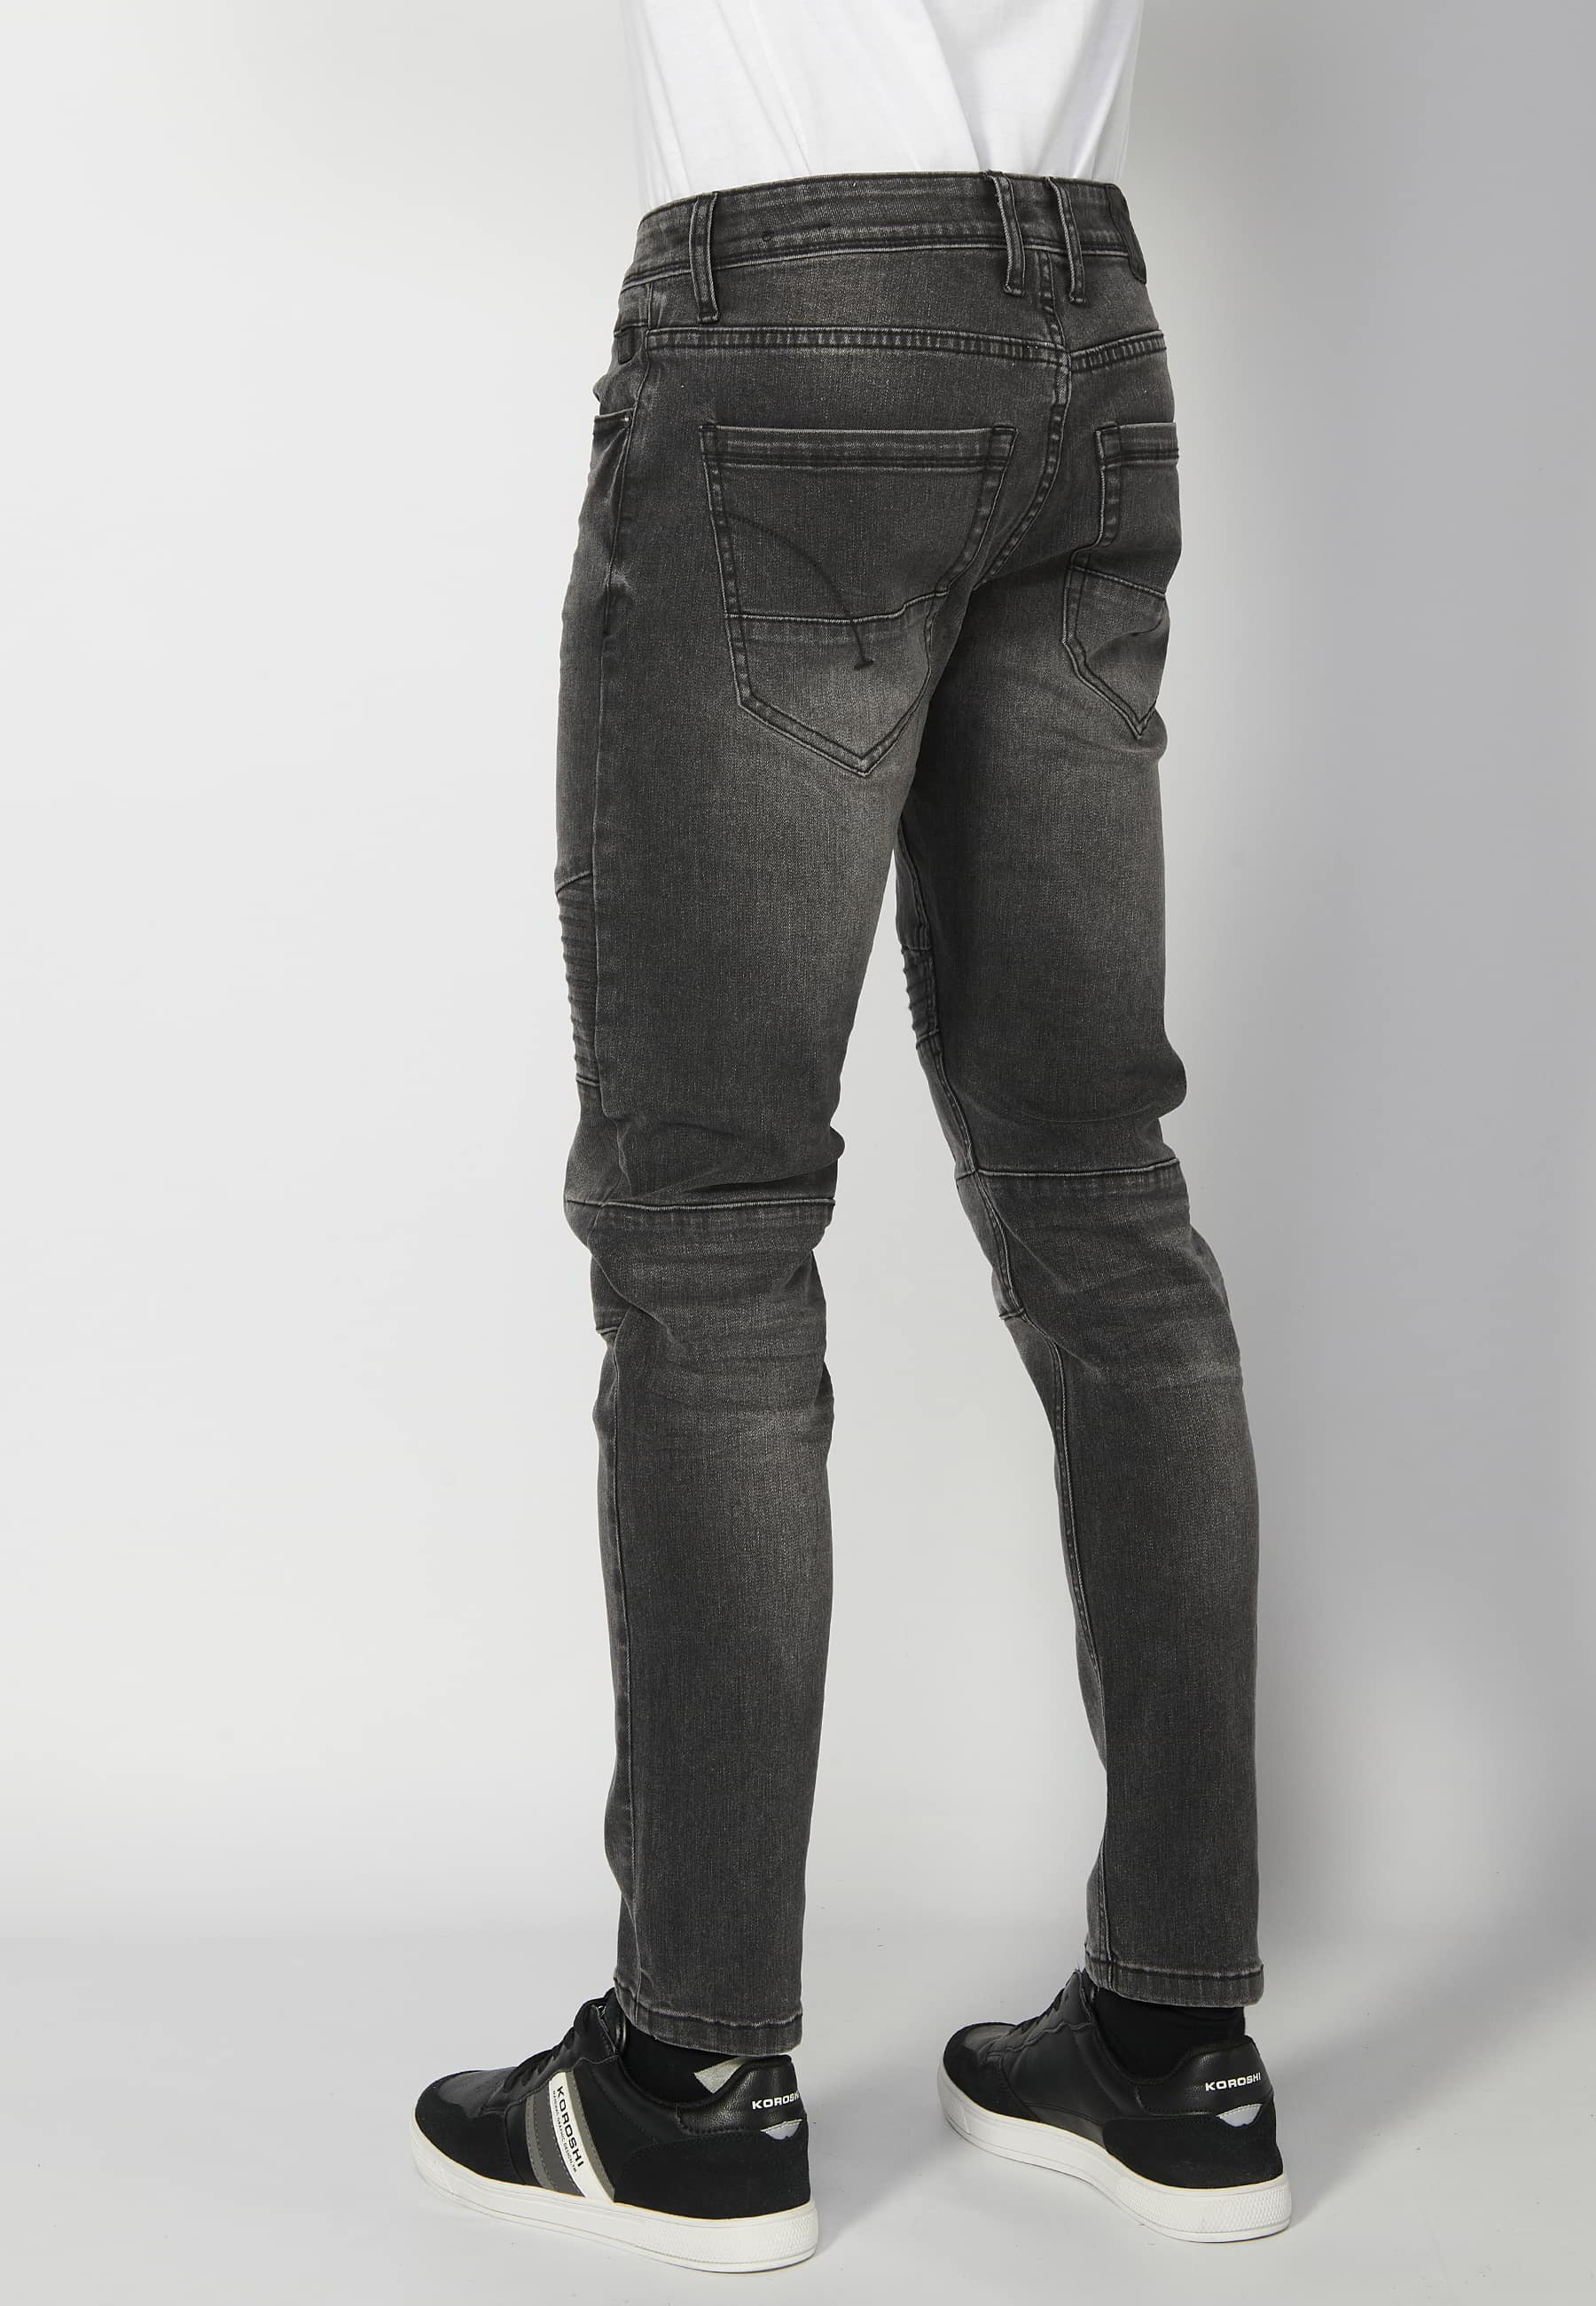 Long skinny fit pants, with five pockets, worn black color for Men 3